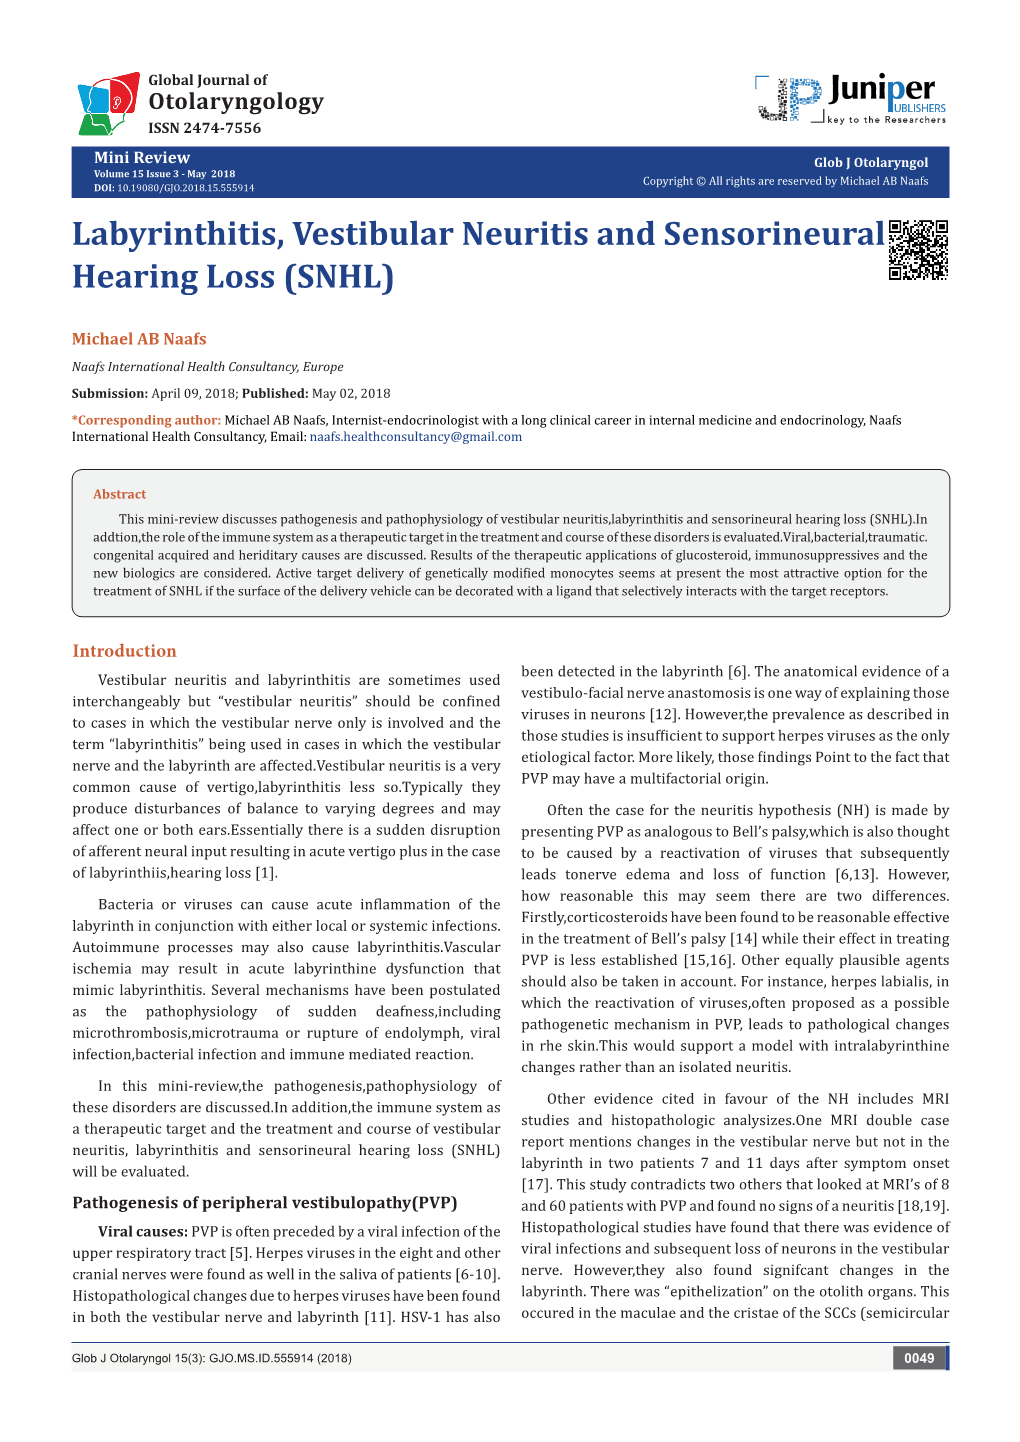 Labyrinthitis, Vestibular Neuritis and Sensorineural Hearing Loss (SNHL)